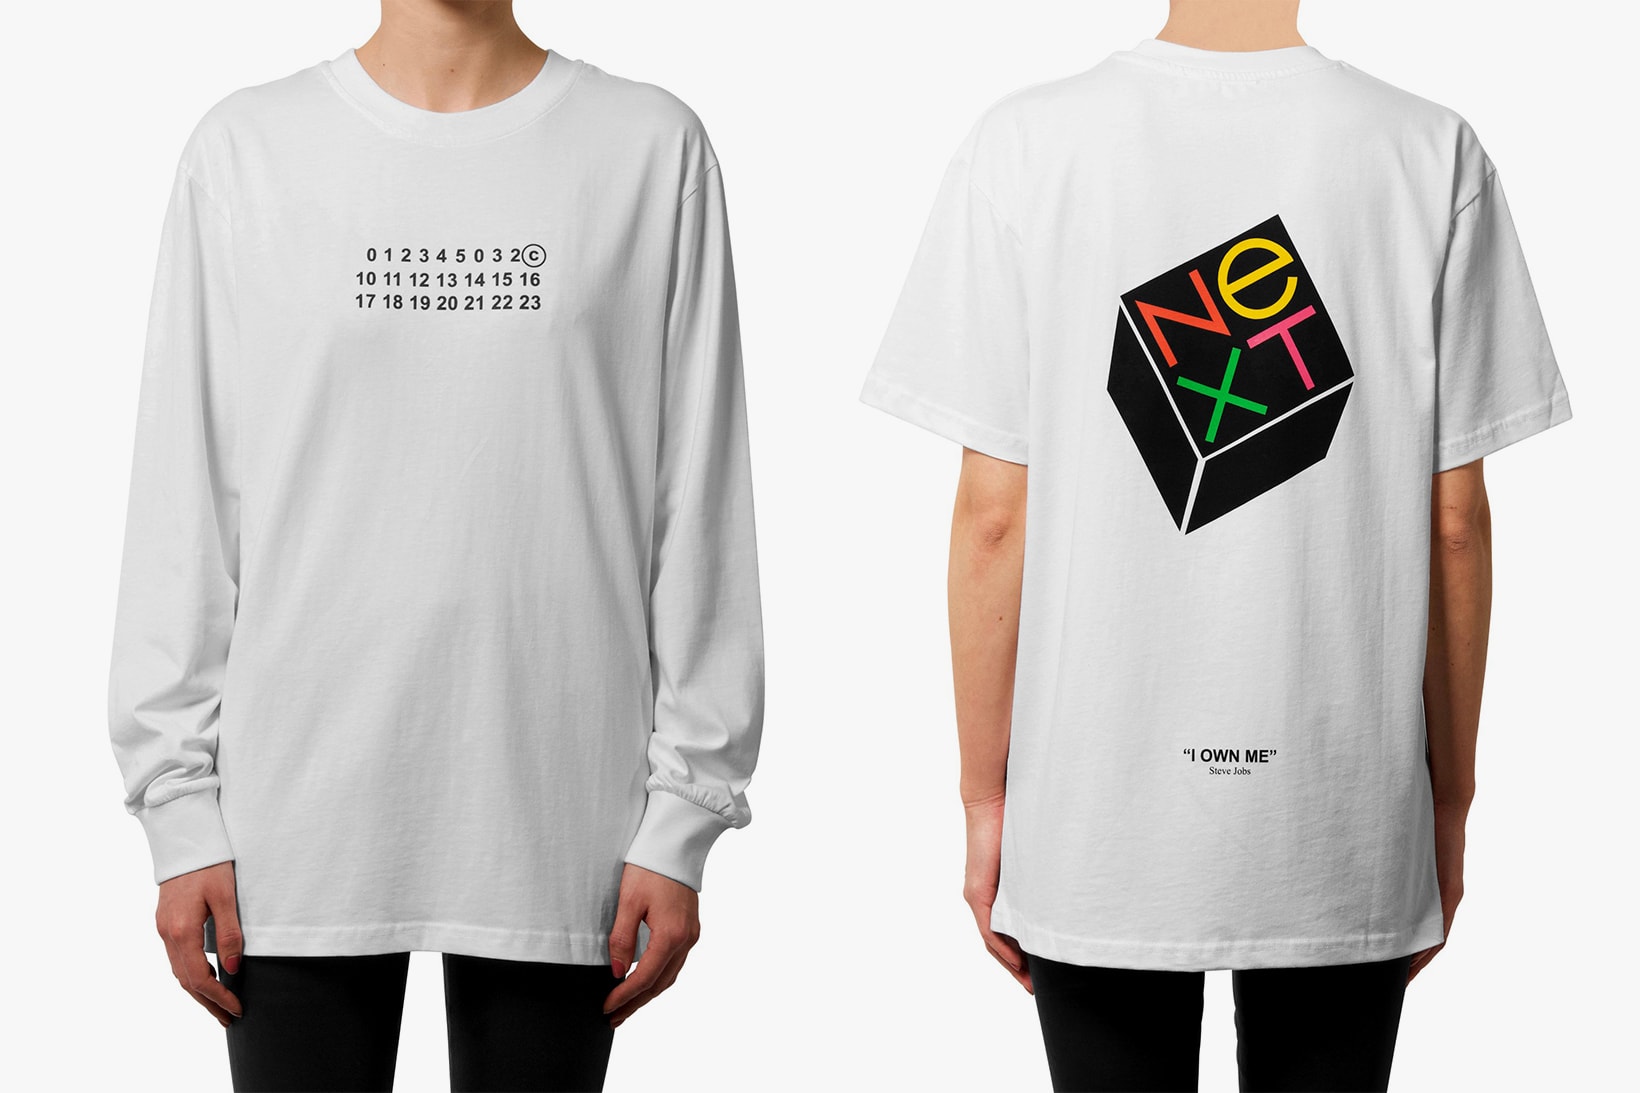 032c Bootleg Maison Margiela NeXT T Shirts tees march 14 2018 release date info drop limited graphic steve jobs logo